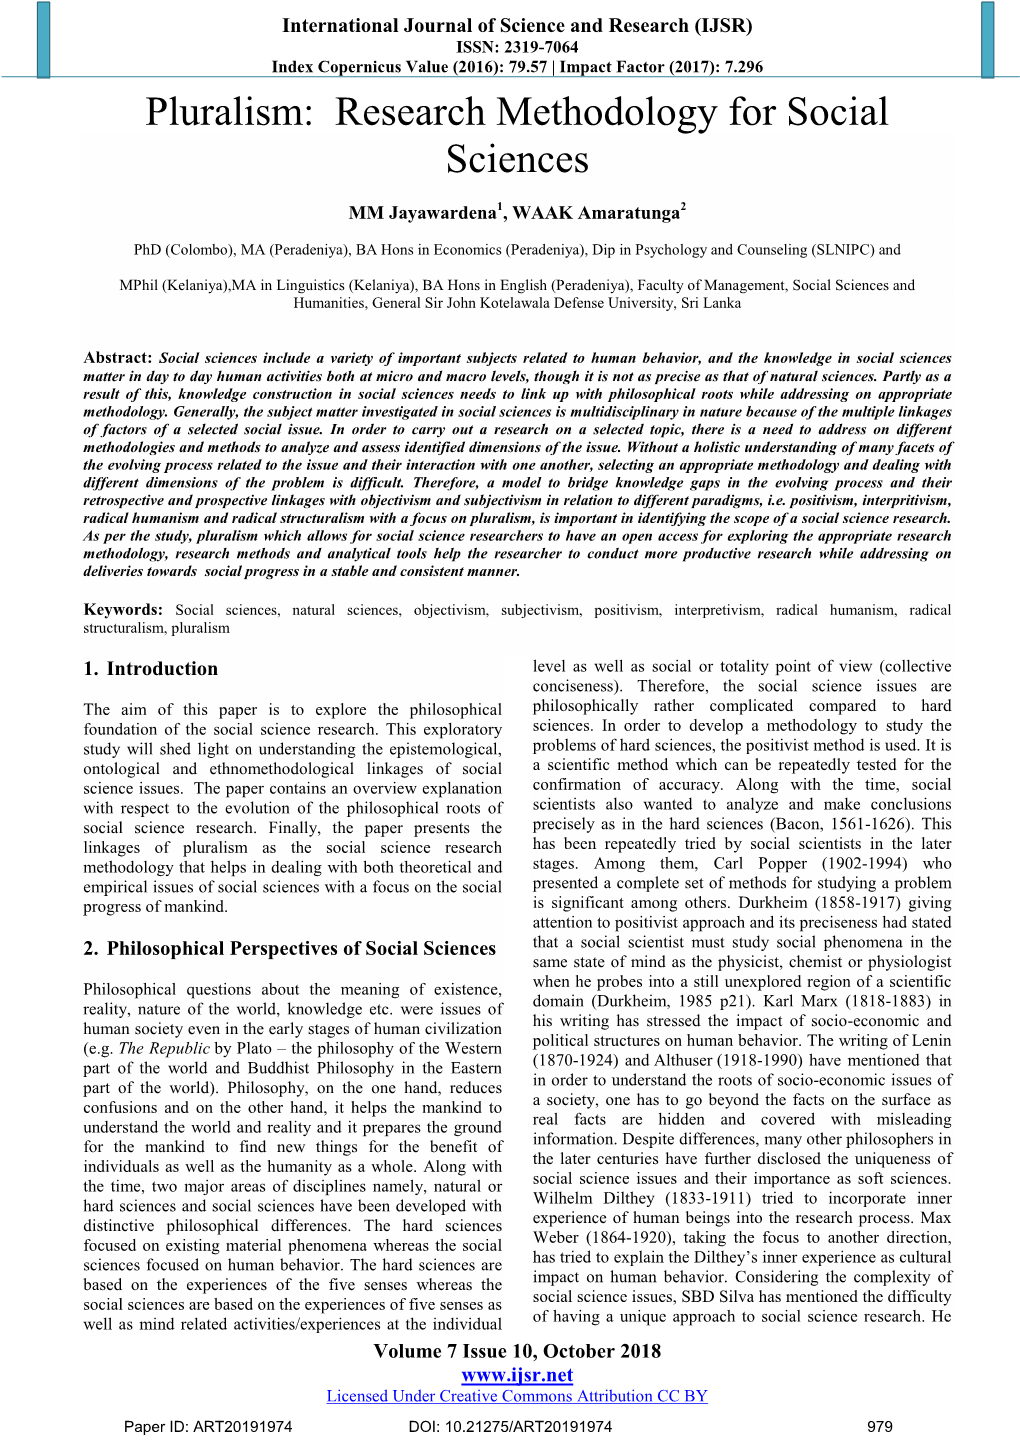 Pluralism: Research Methodology for Social Sciences